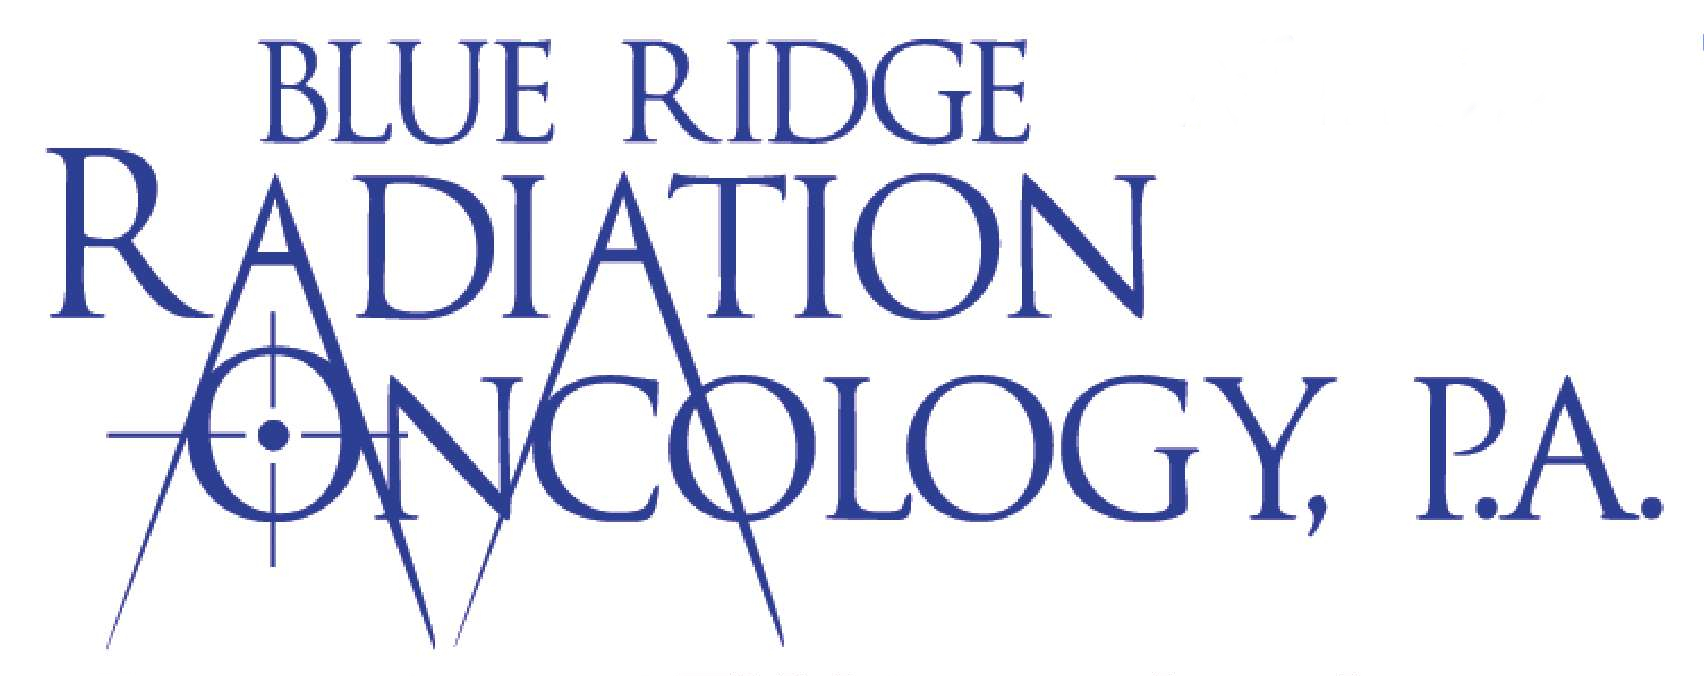 Blue Ridge Radiation Oncology, P.A.